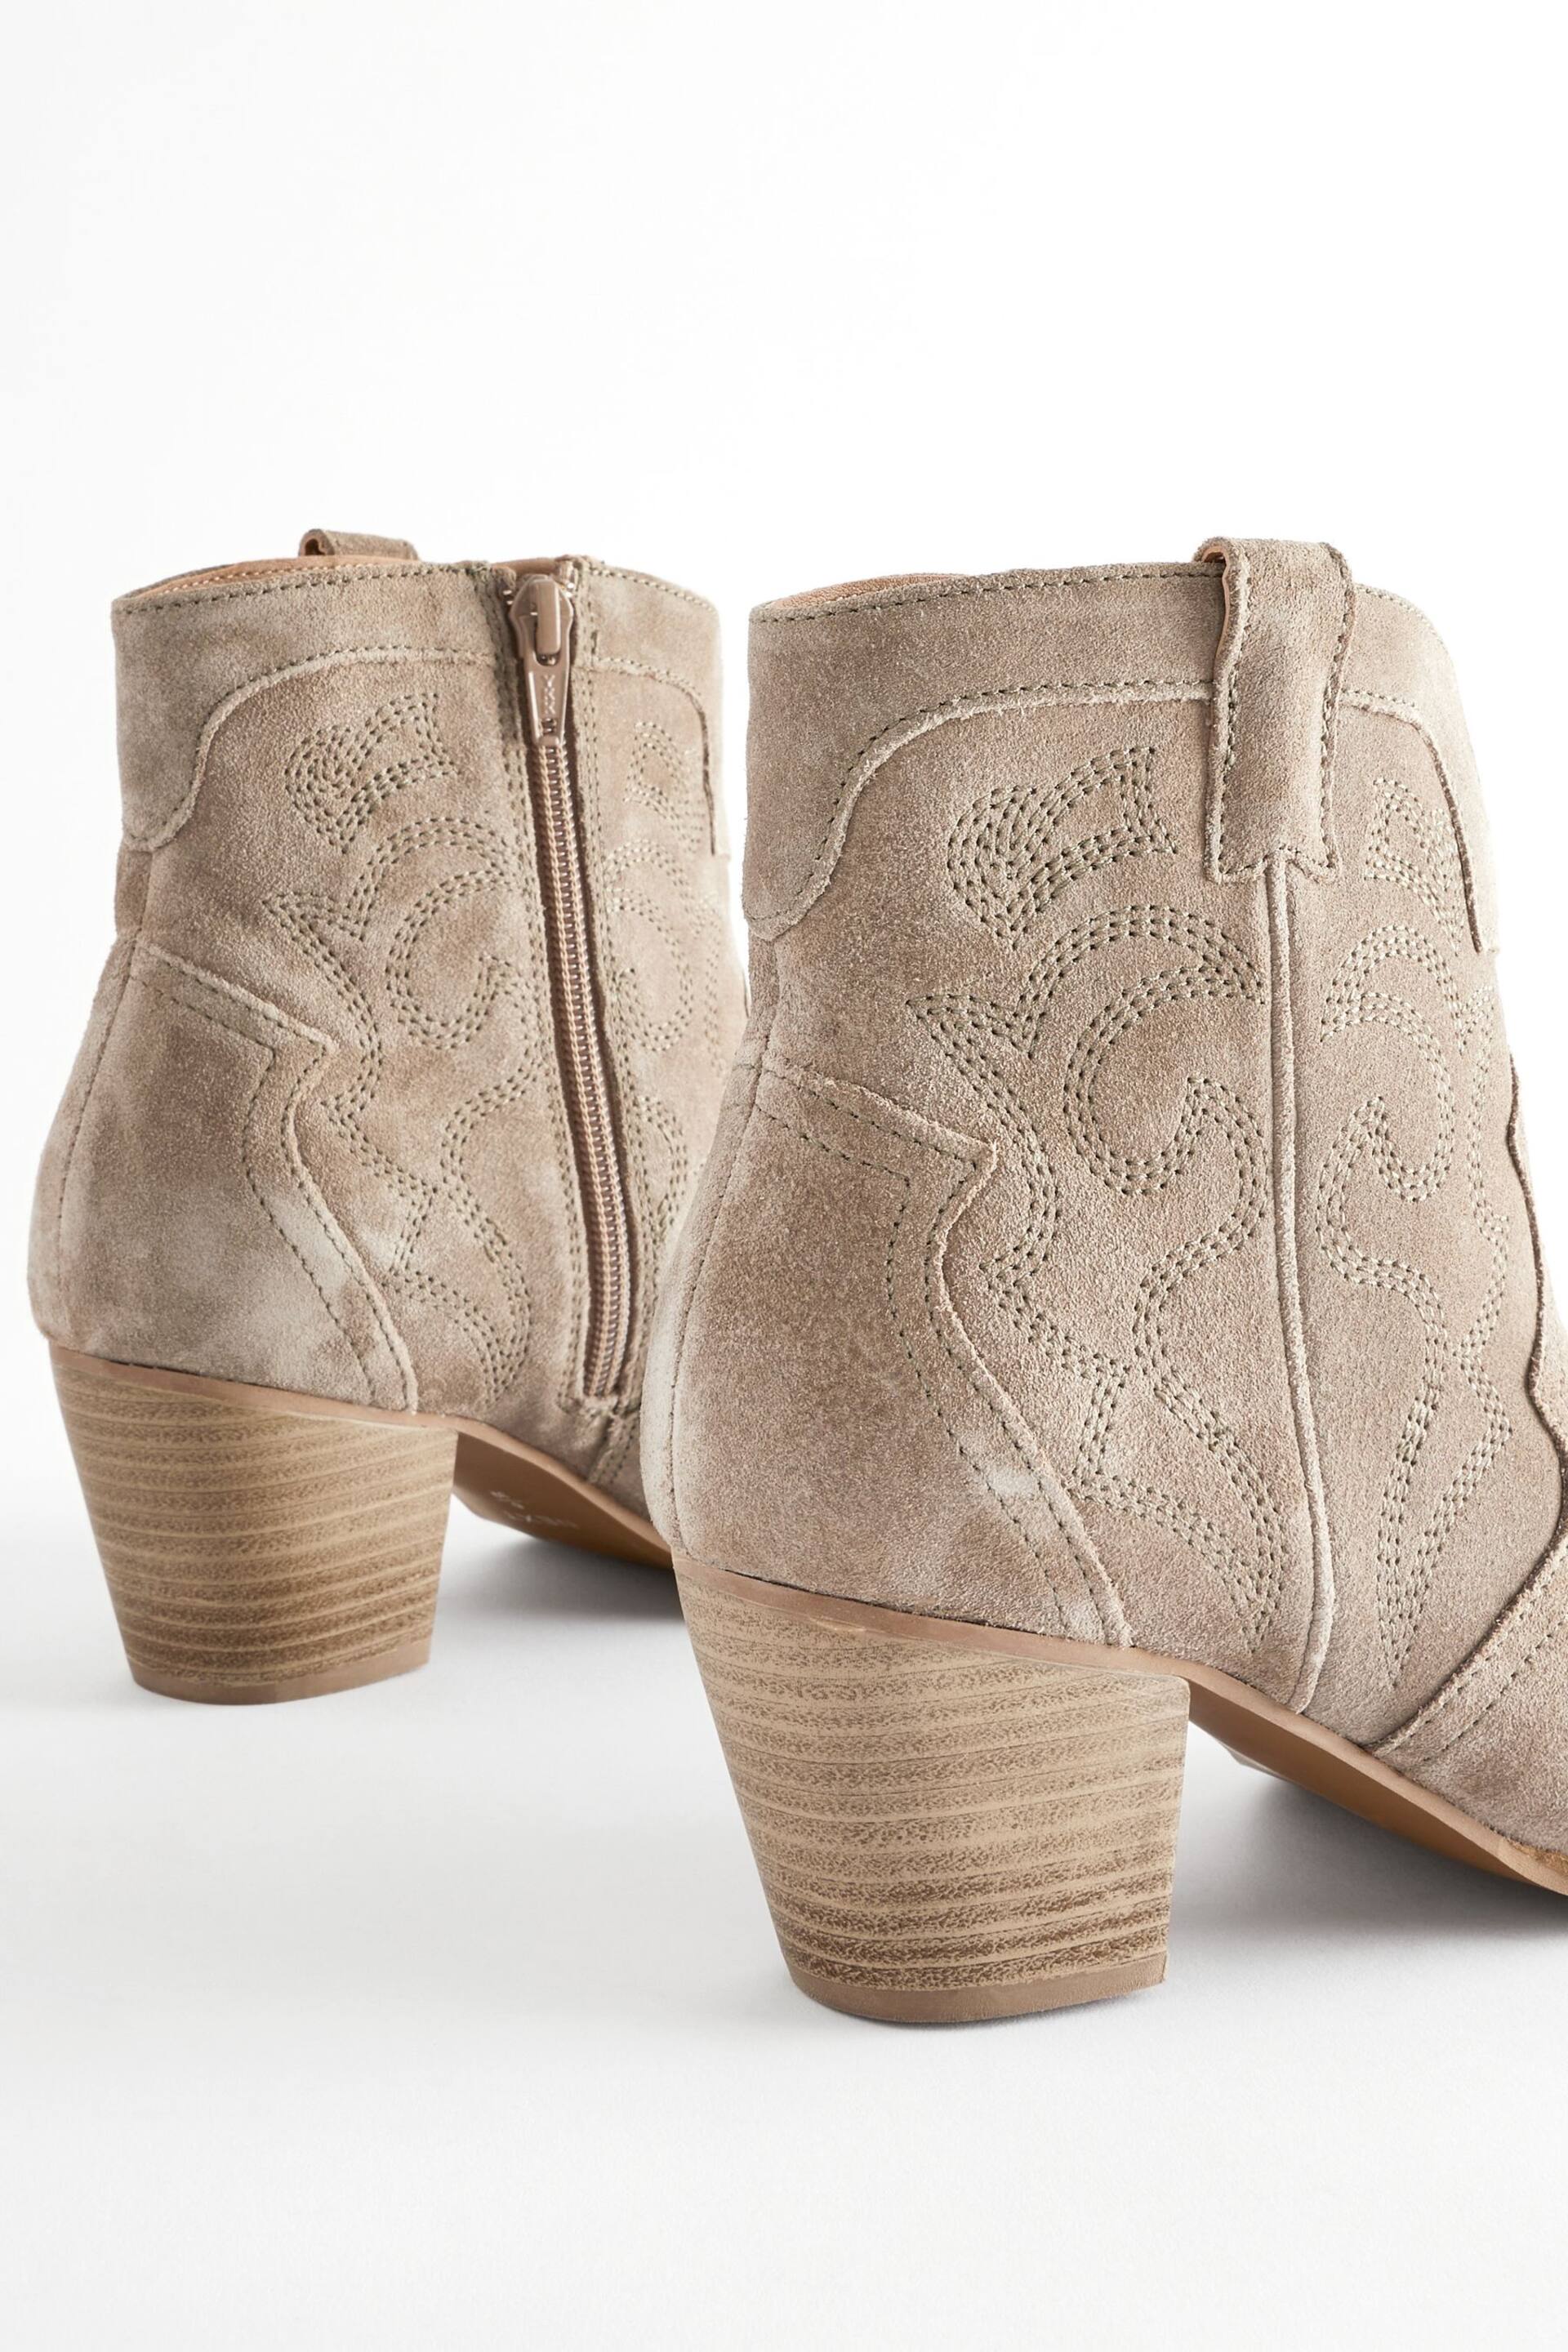 Mink Brown Regular/Wide Fit Forever Comfort® Stitched Detail Ankle Western/Cowboy Boots - Image 3 of 9